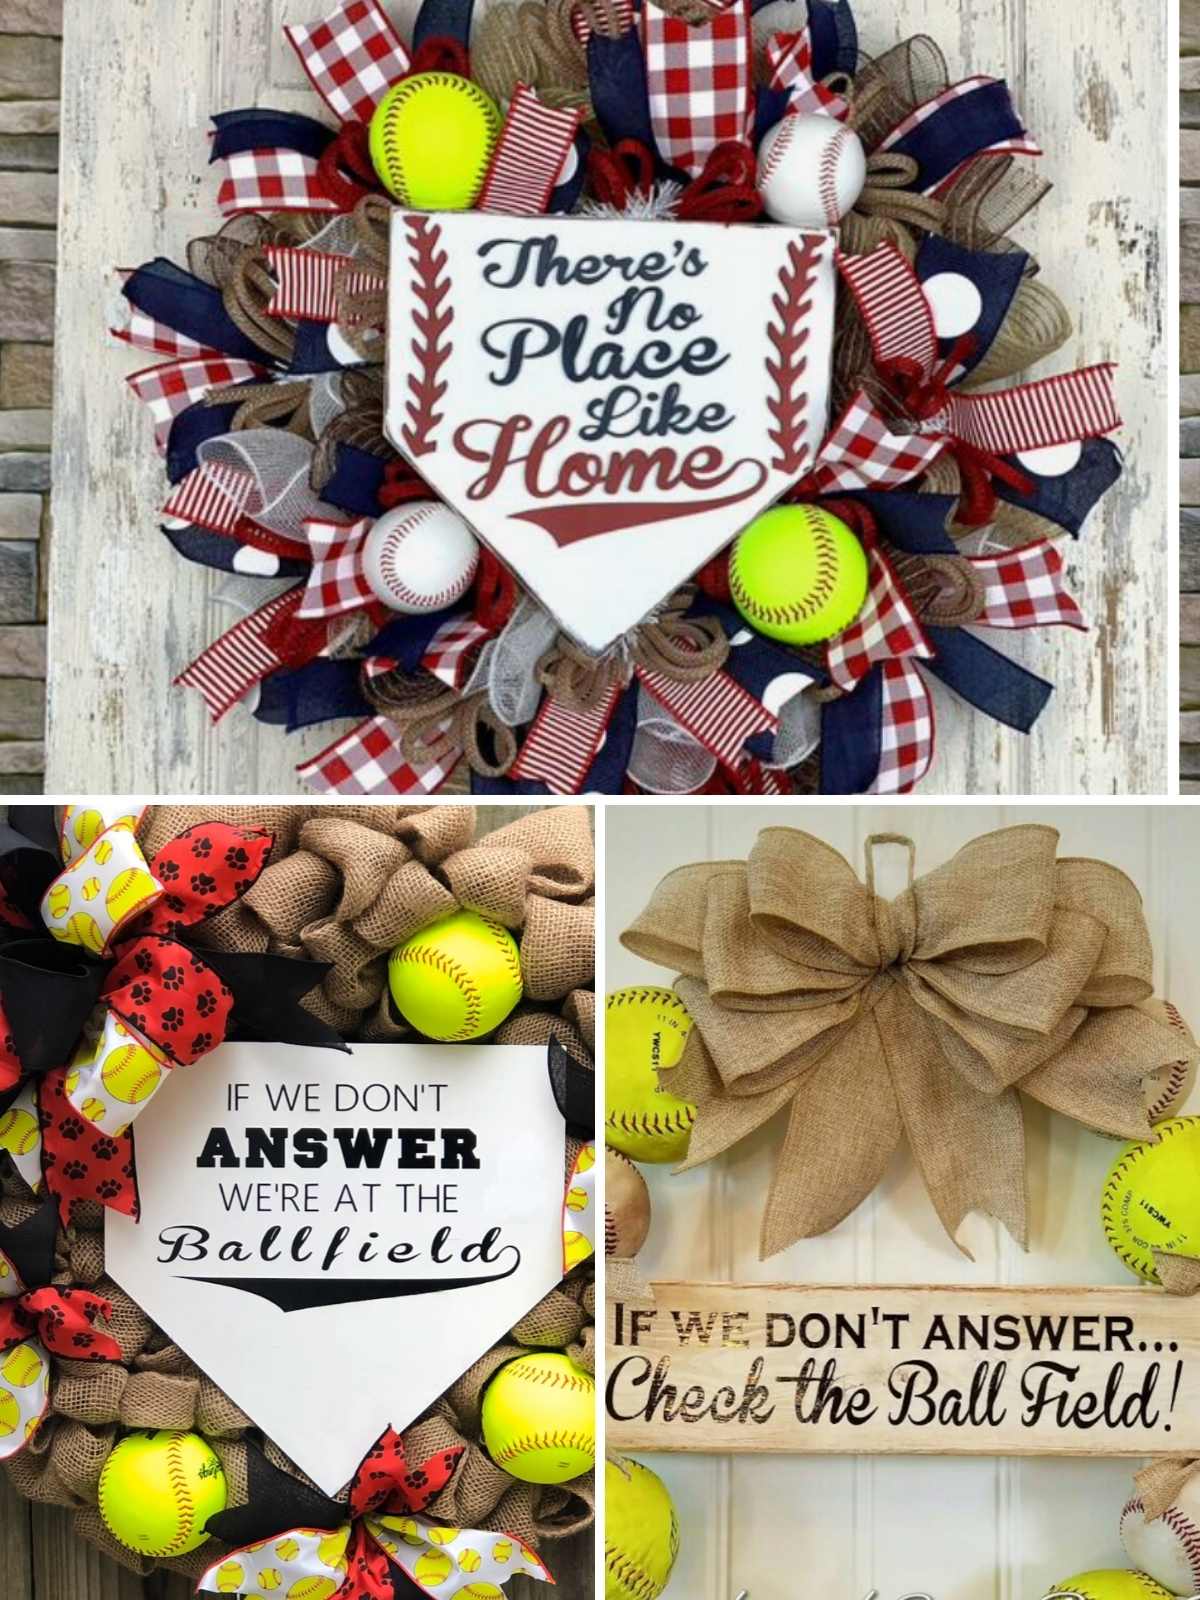 Cute baseball field sayings on wreaths